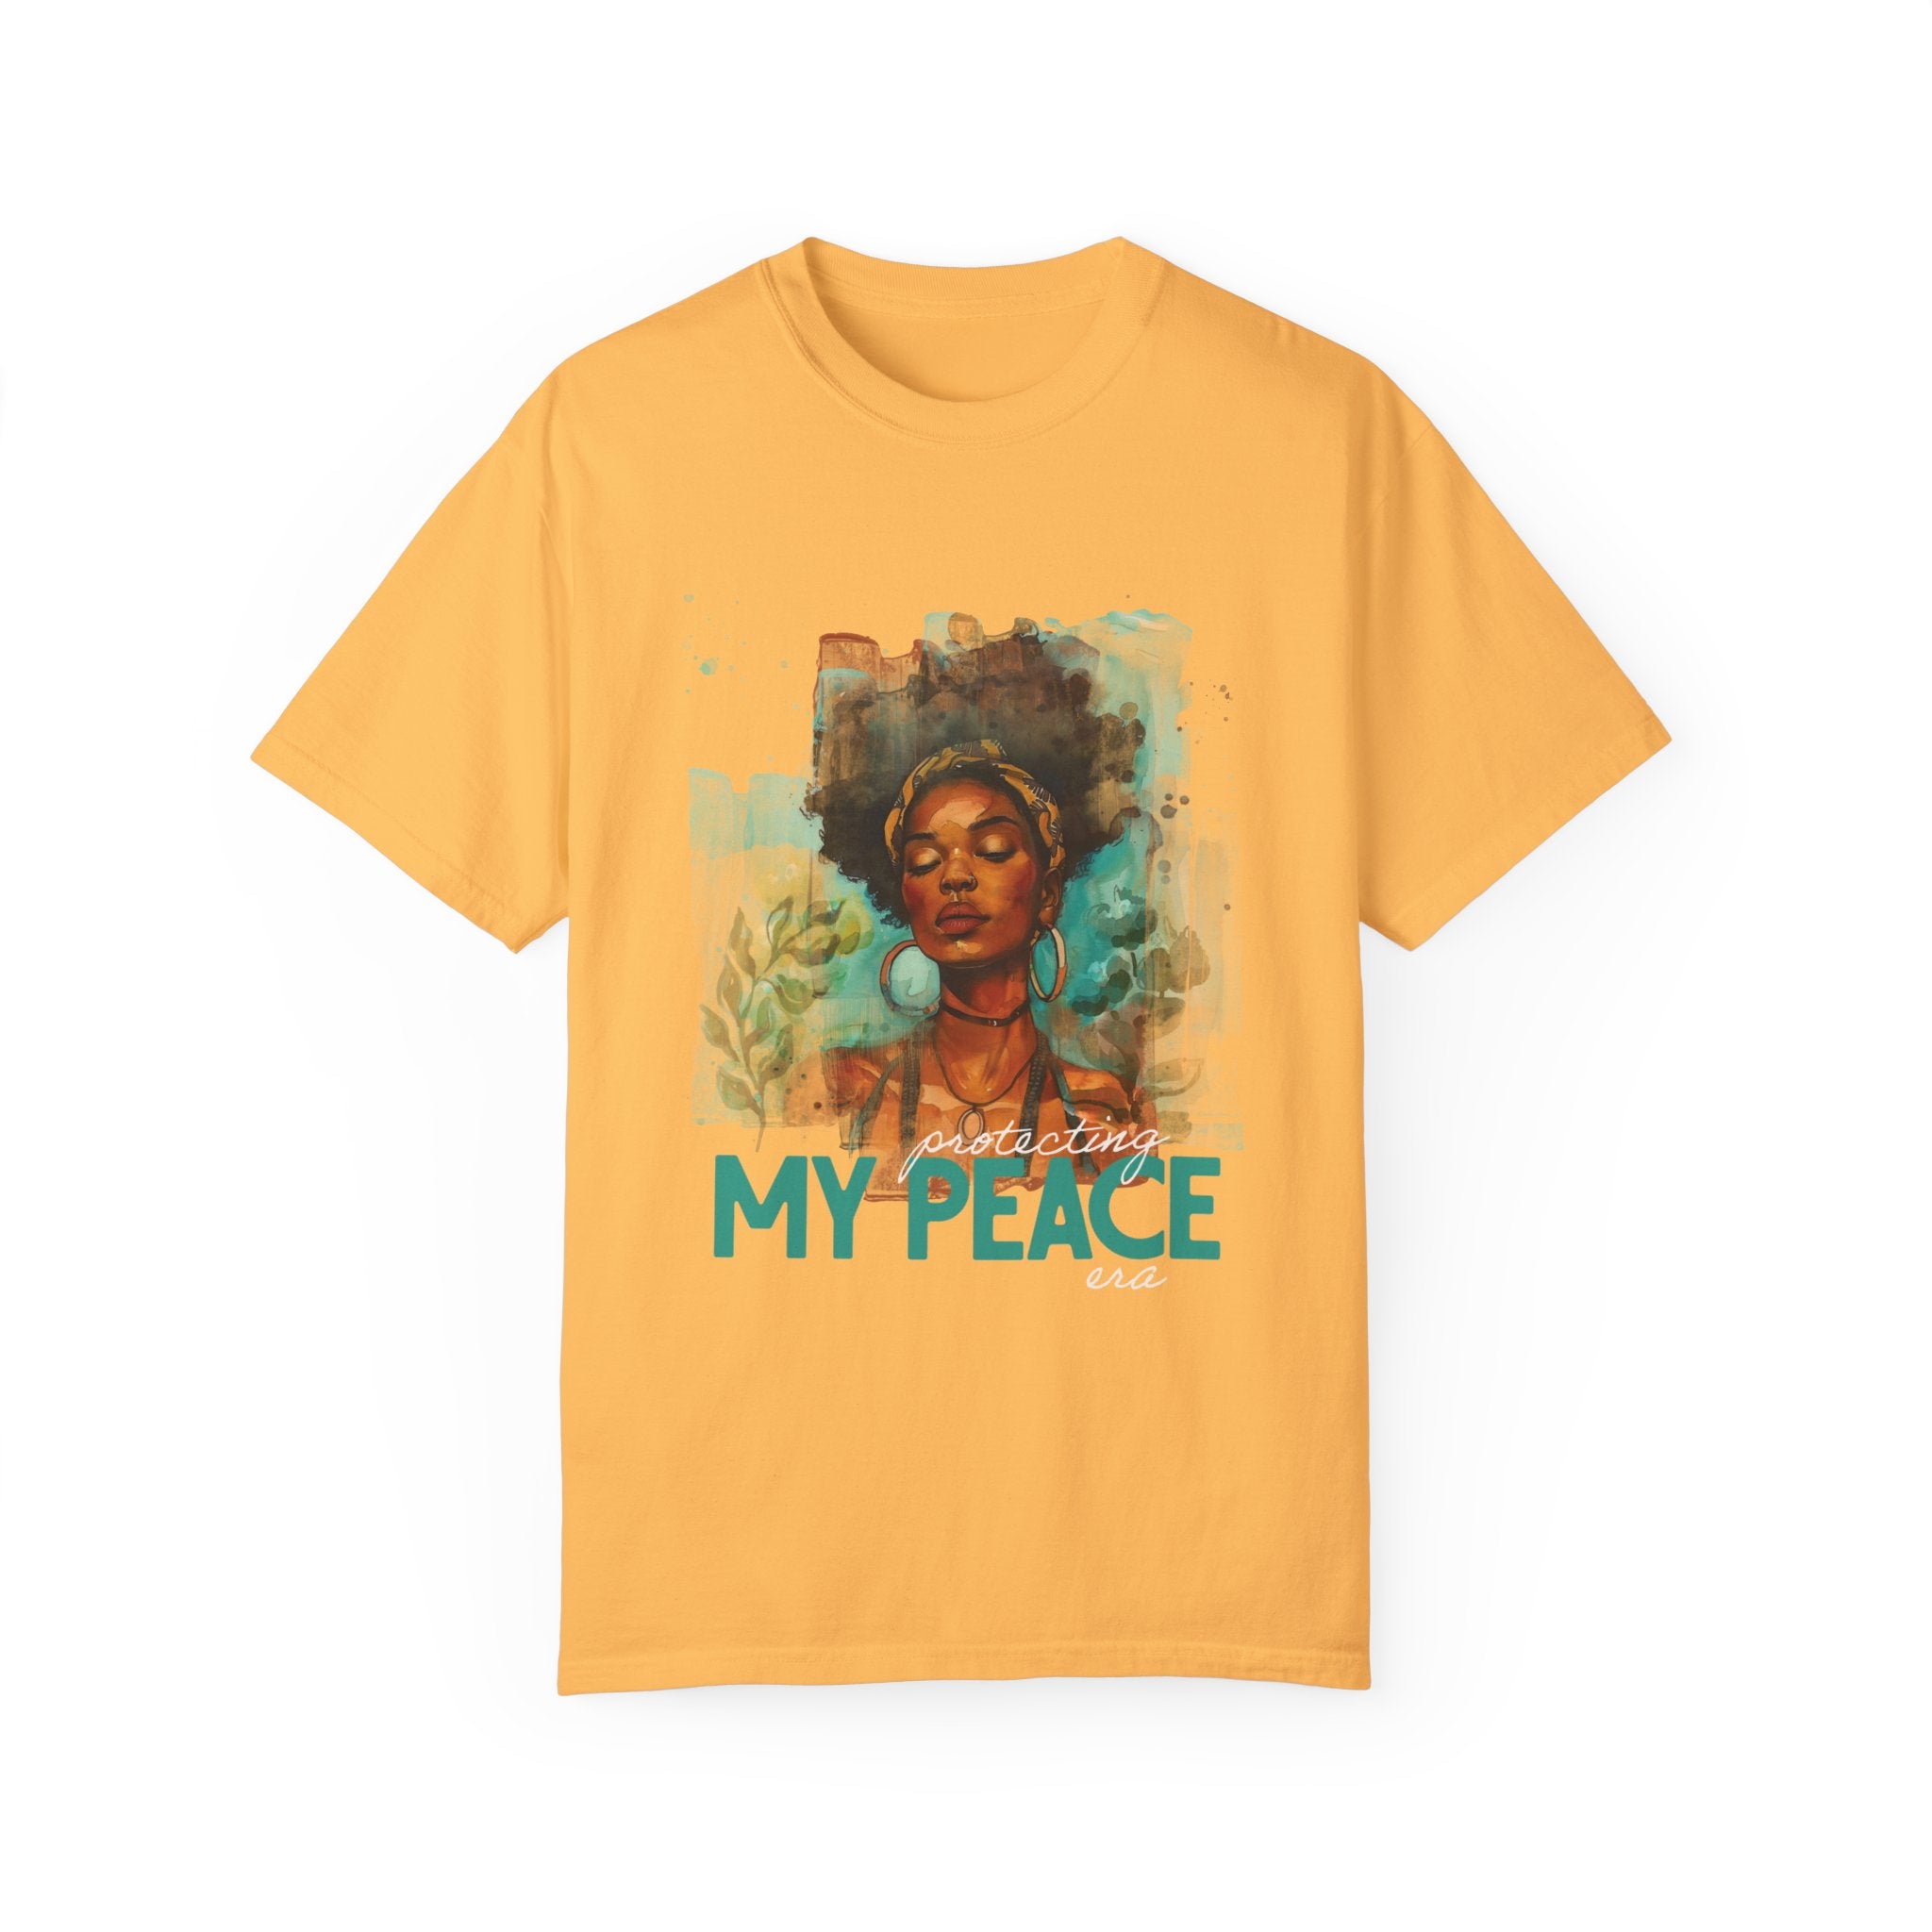 In My Era Women's Graphic Tee 100% cotton Garment-Dyed T-shirt